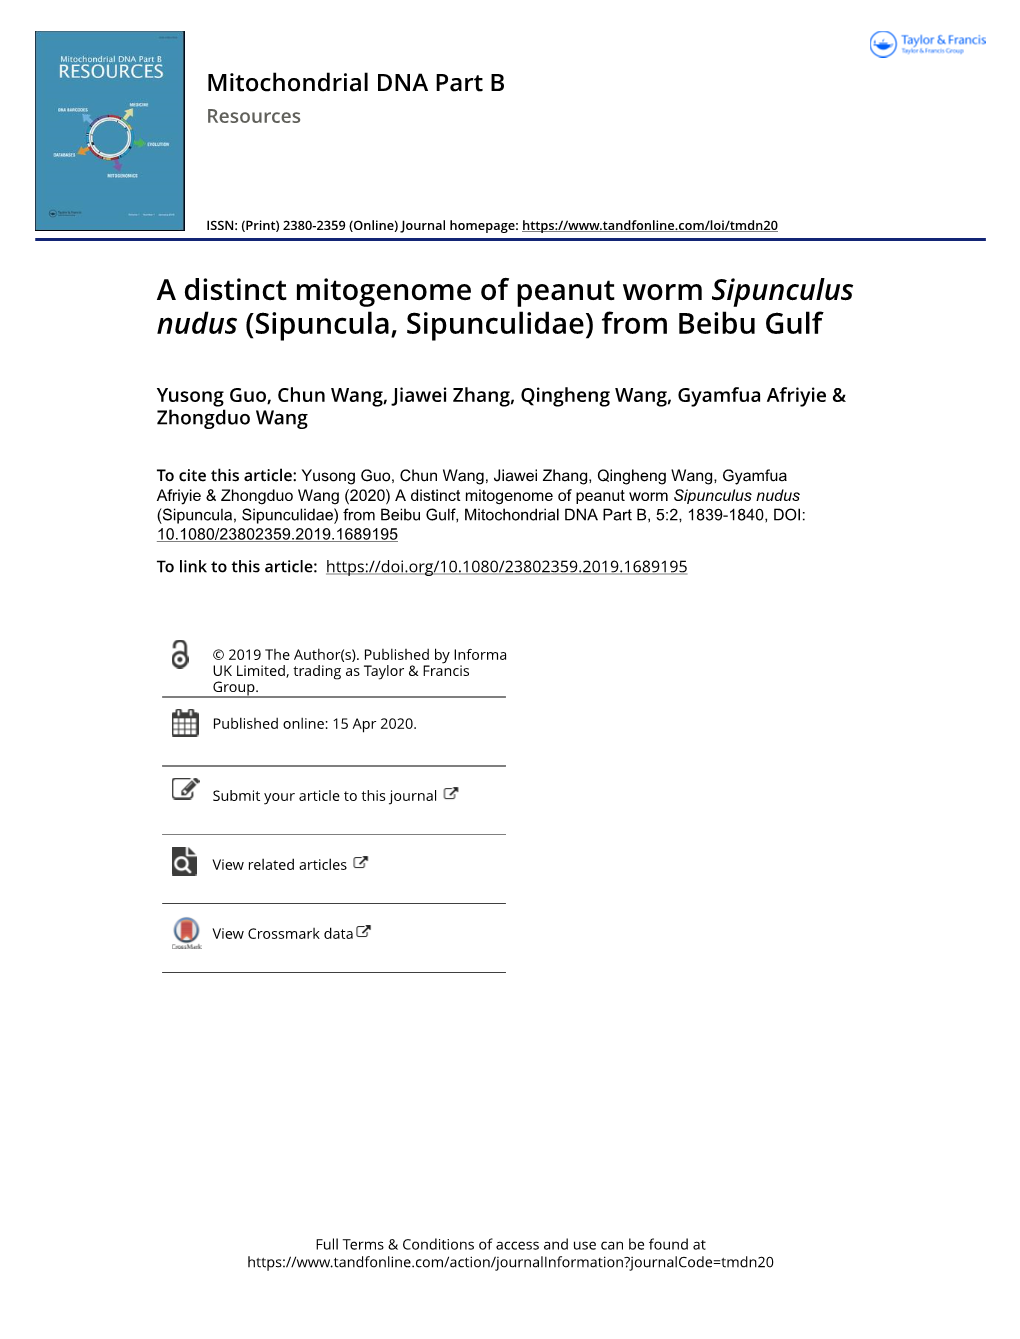 A Distinct Mitogenome of Peanut Worm Sipunculus Nudus (Sipuncula, Sipunculidae) from Beibu Gulf